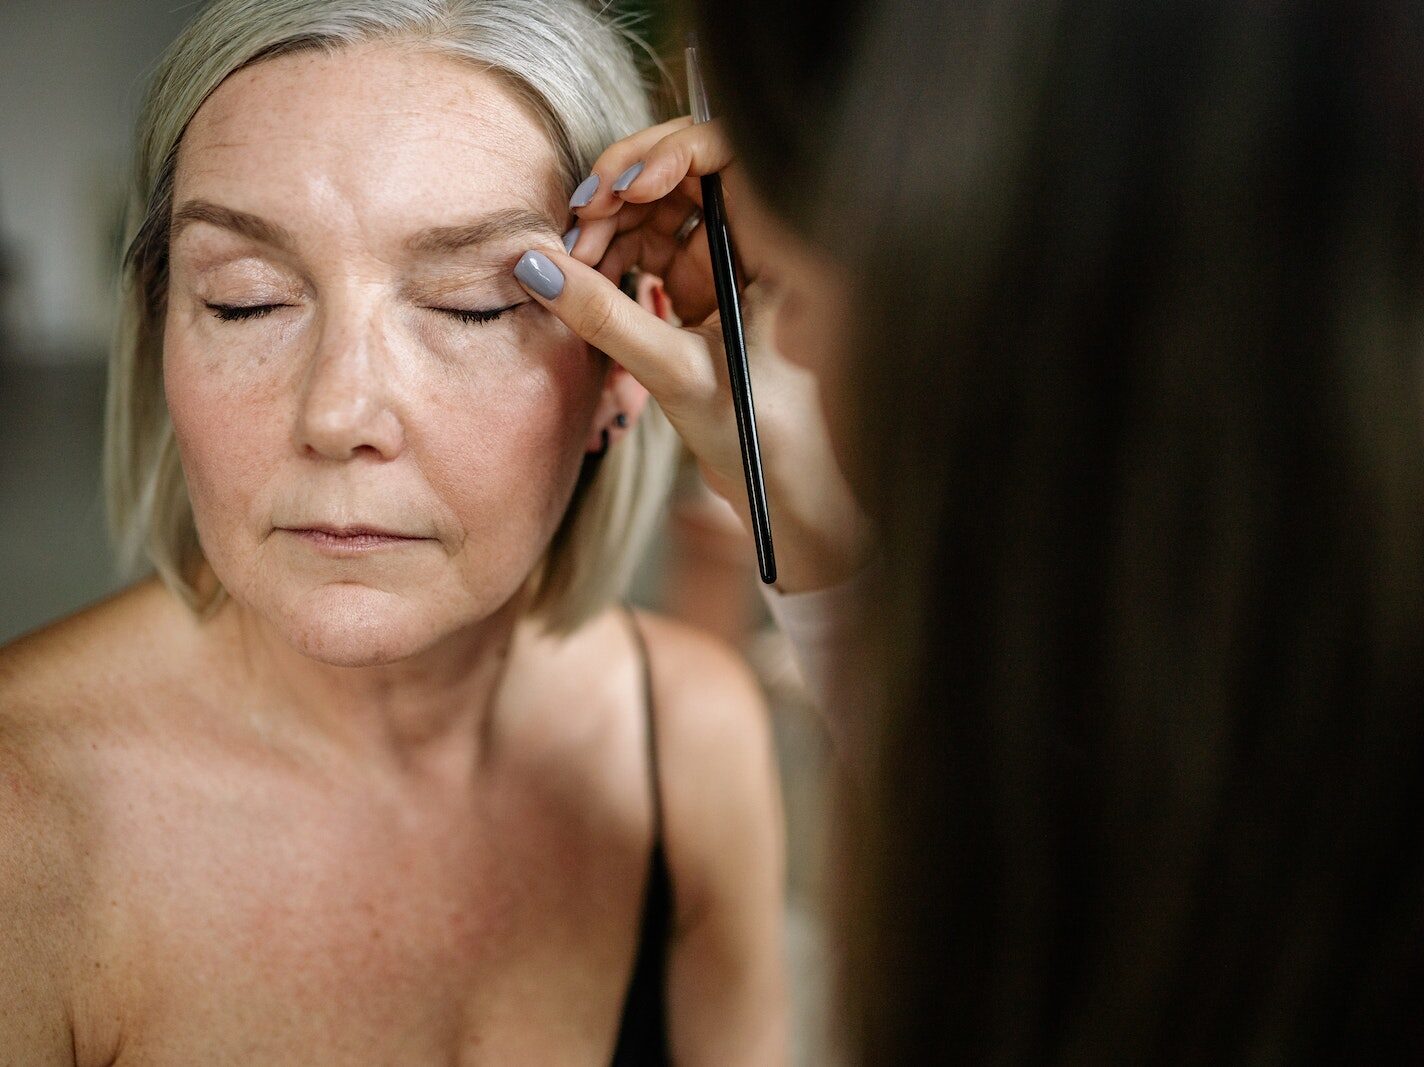 An Elderly Woman Having Her Makeup Done